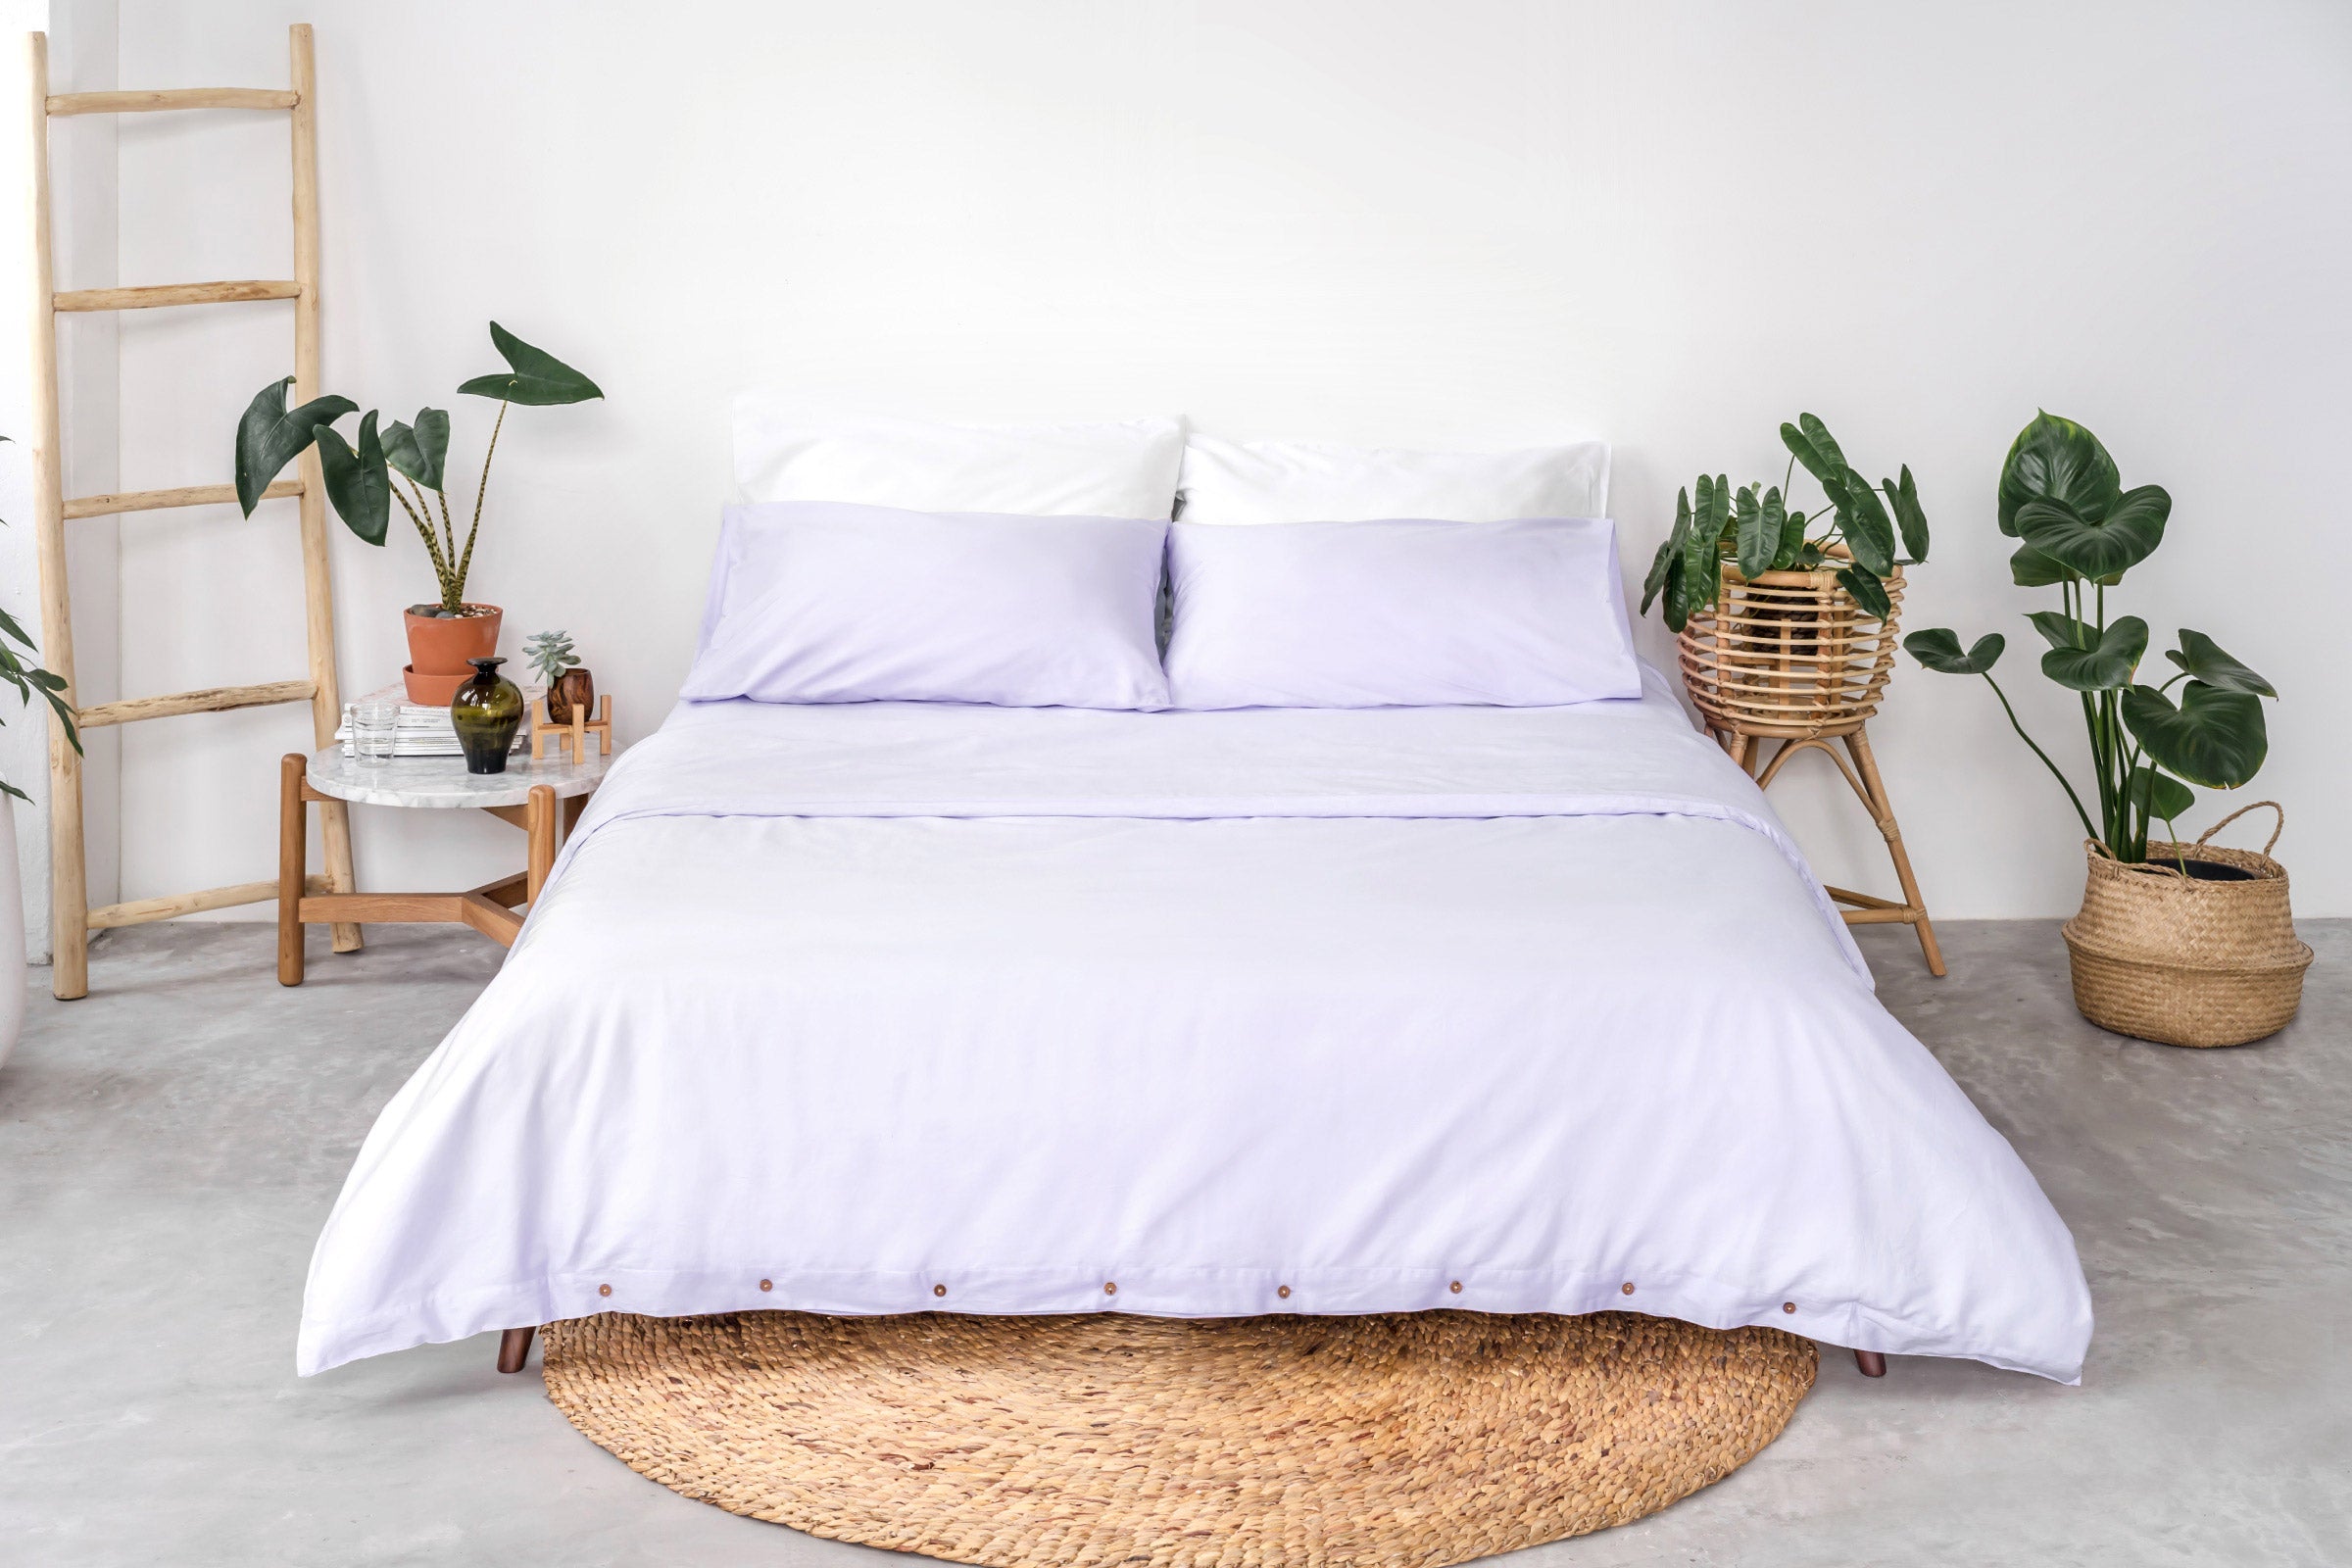 classic-lilac-fitted-sheet-duvet-cover-pillowcase-pair-white-pillowcase-pair-by-sojao.jpg